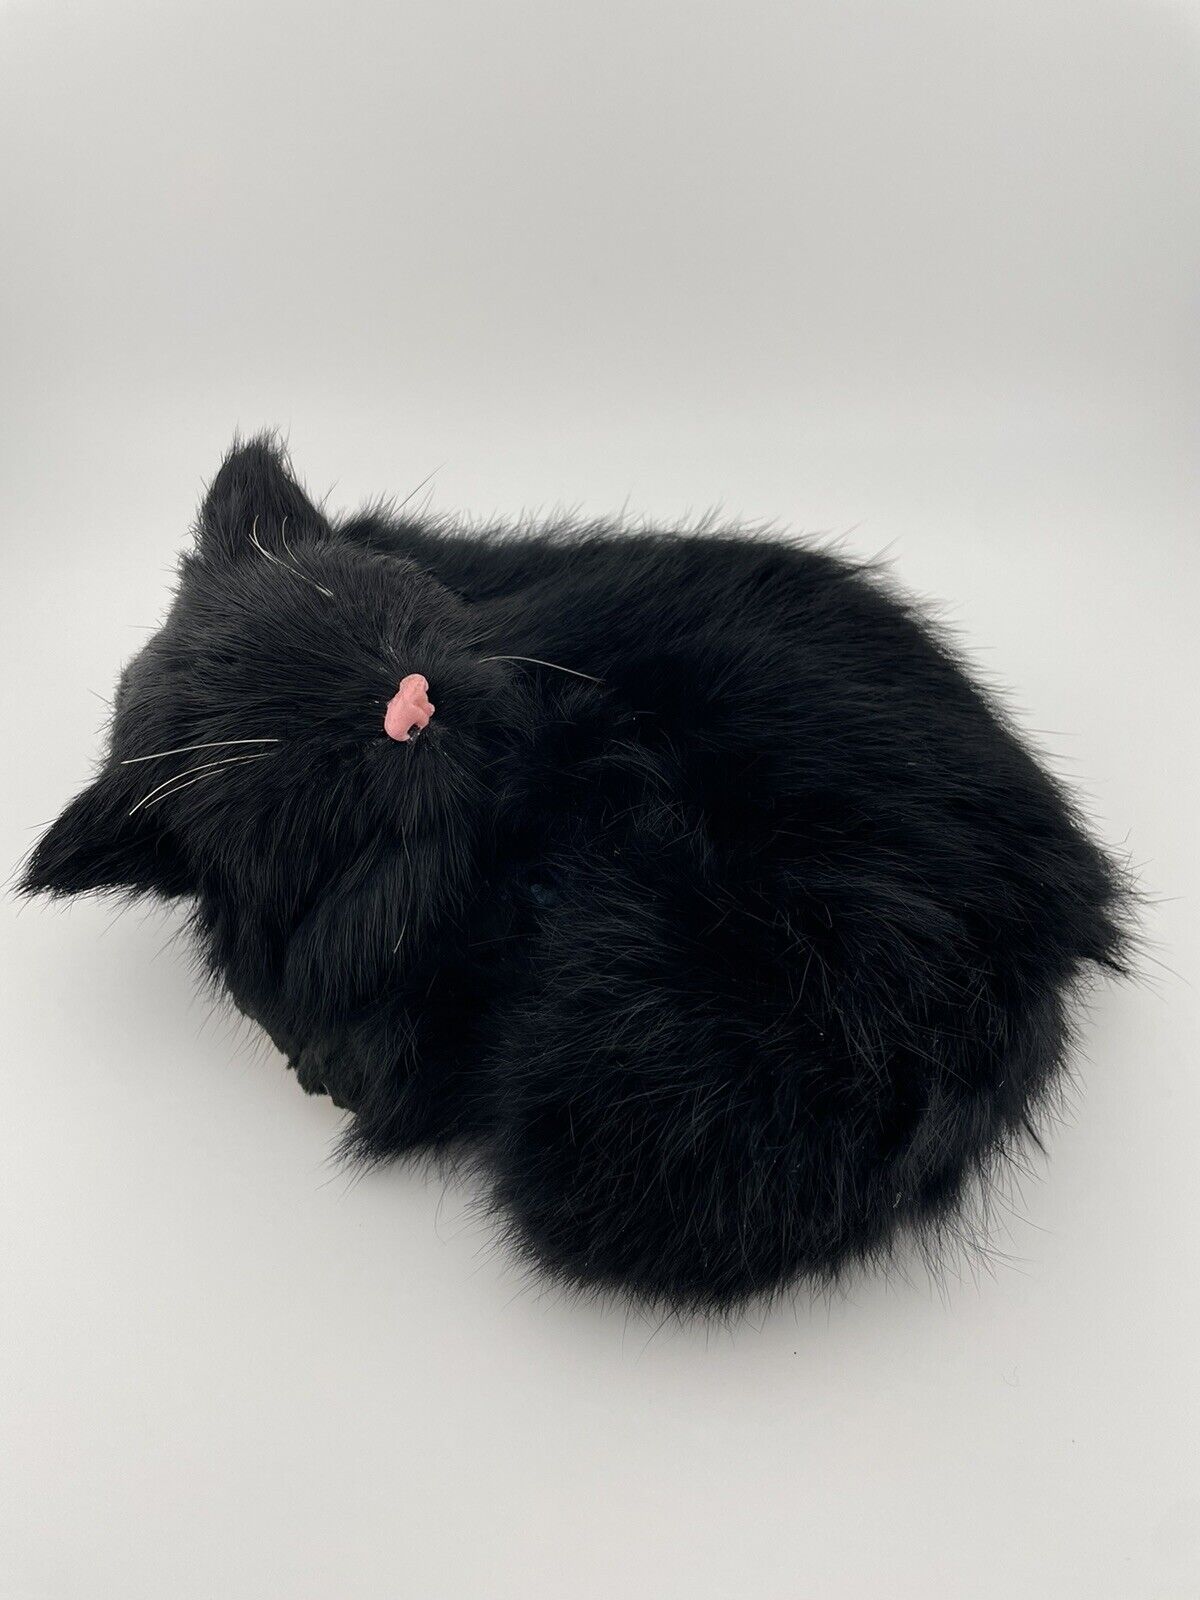 Vintage Realistic Sleeping Cat/ Kitten Lifelike Made With Real Rabbit Fur Black